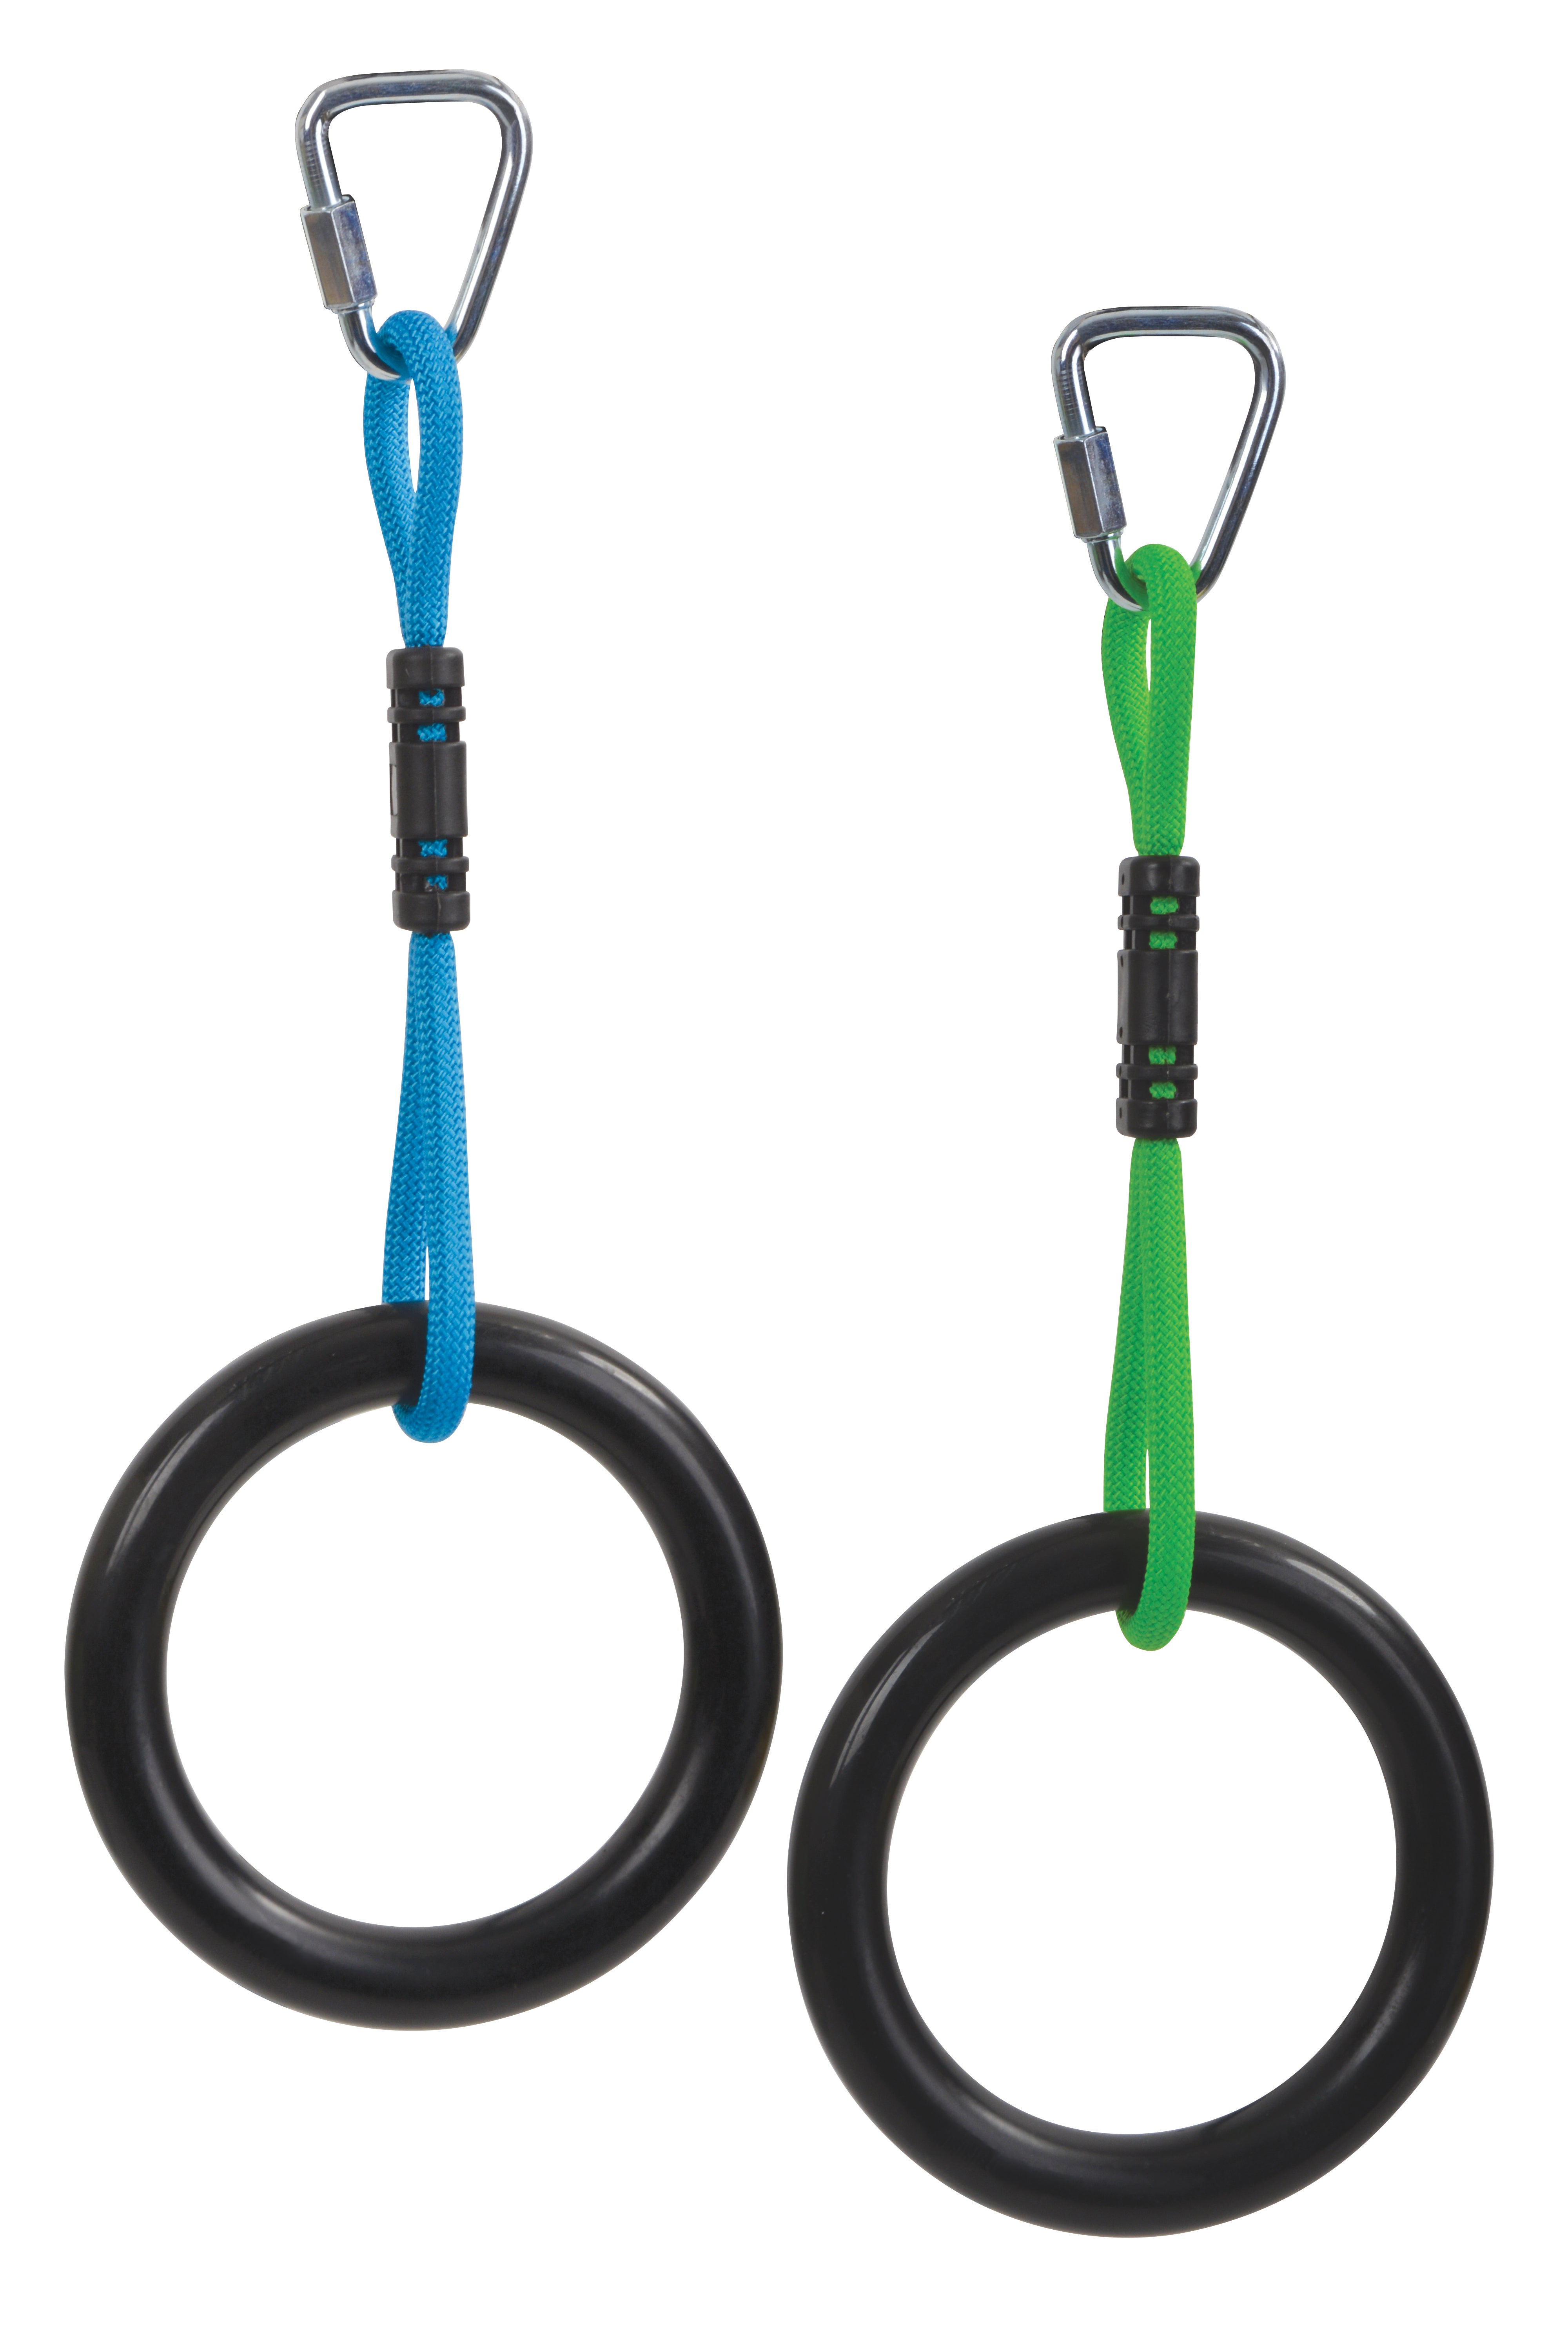 Set of 2 jungle gym rings (max. 120 kg)